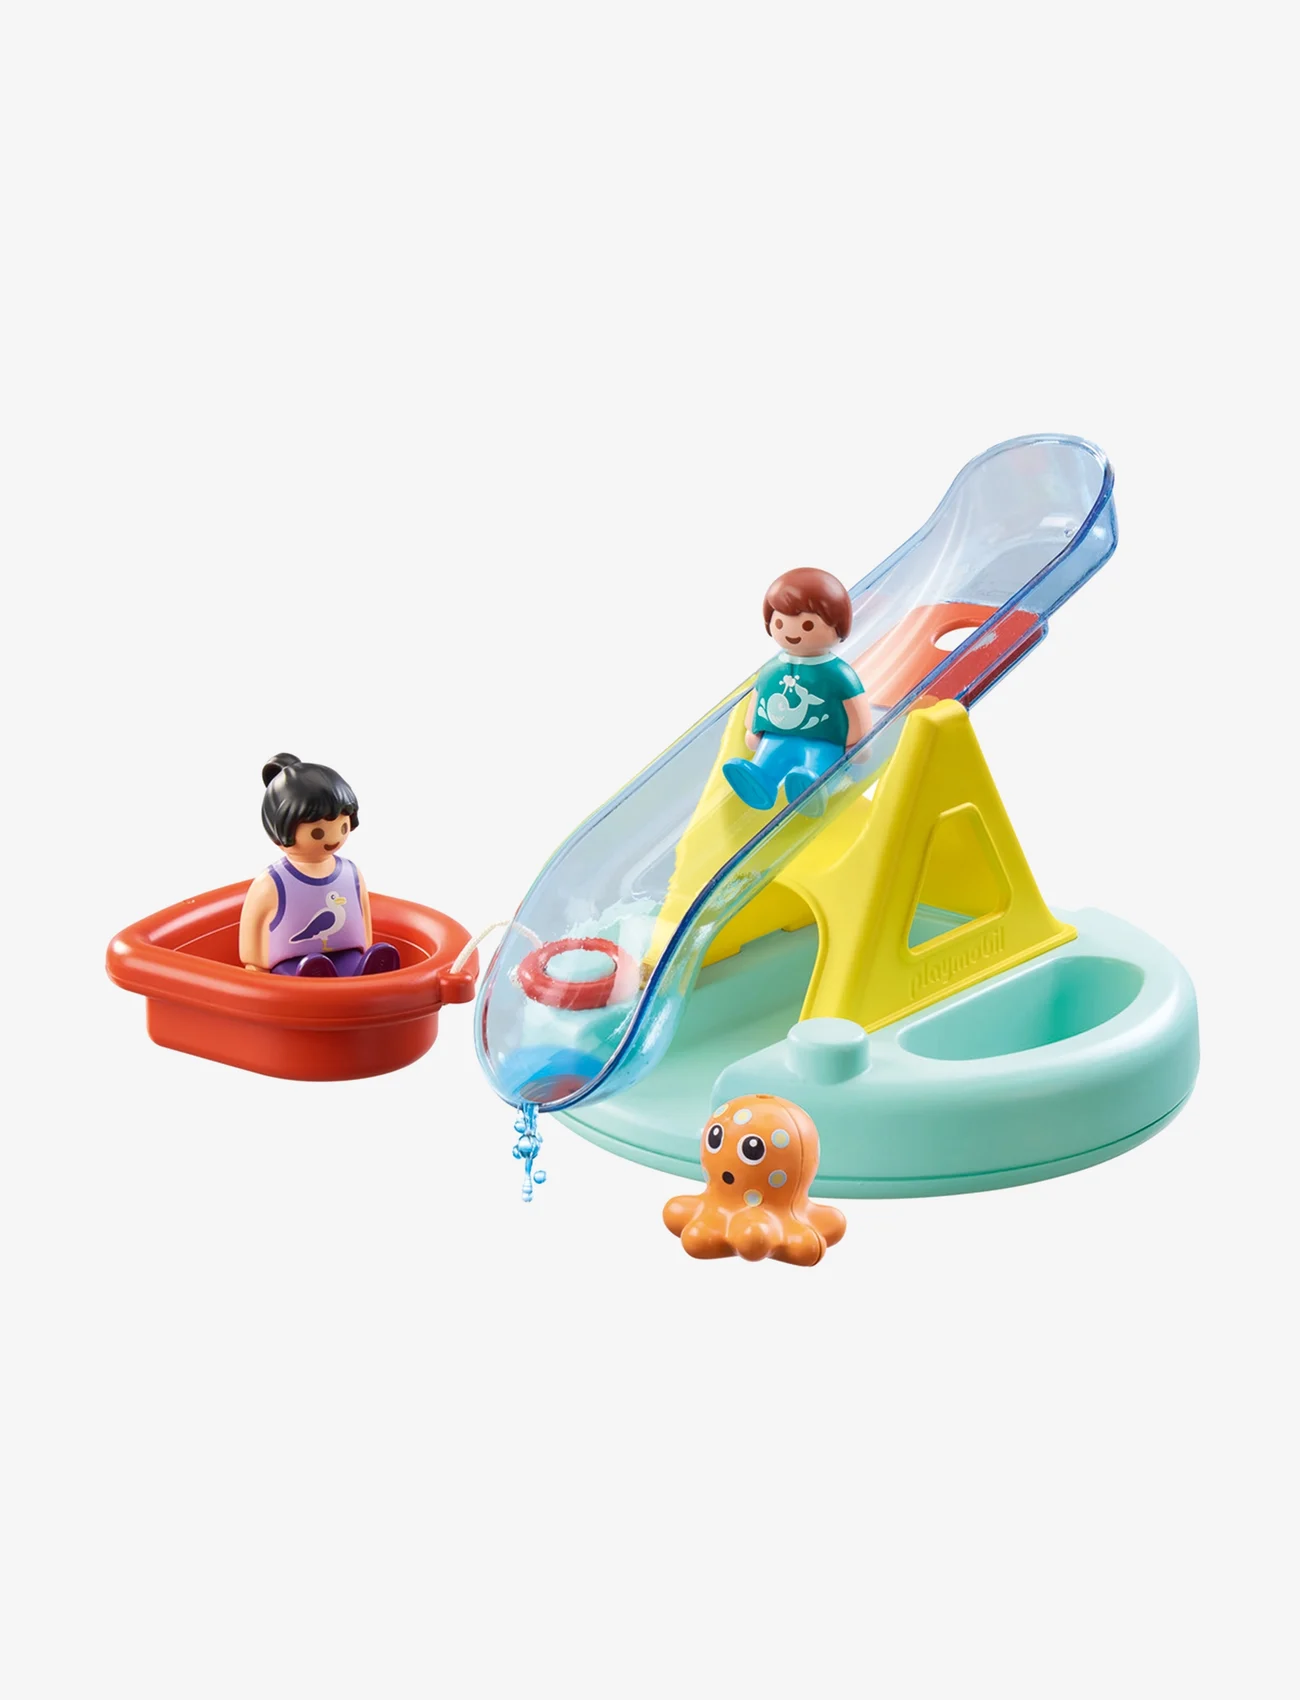 PLAYMOBIL - PLAYMOBIL 1.2.3 Aqua Water Seesaw with Boat - 70635 - playmobil 1.2.3 - multicolored - 1